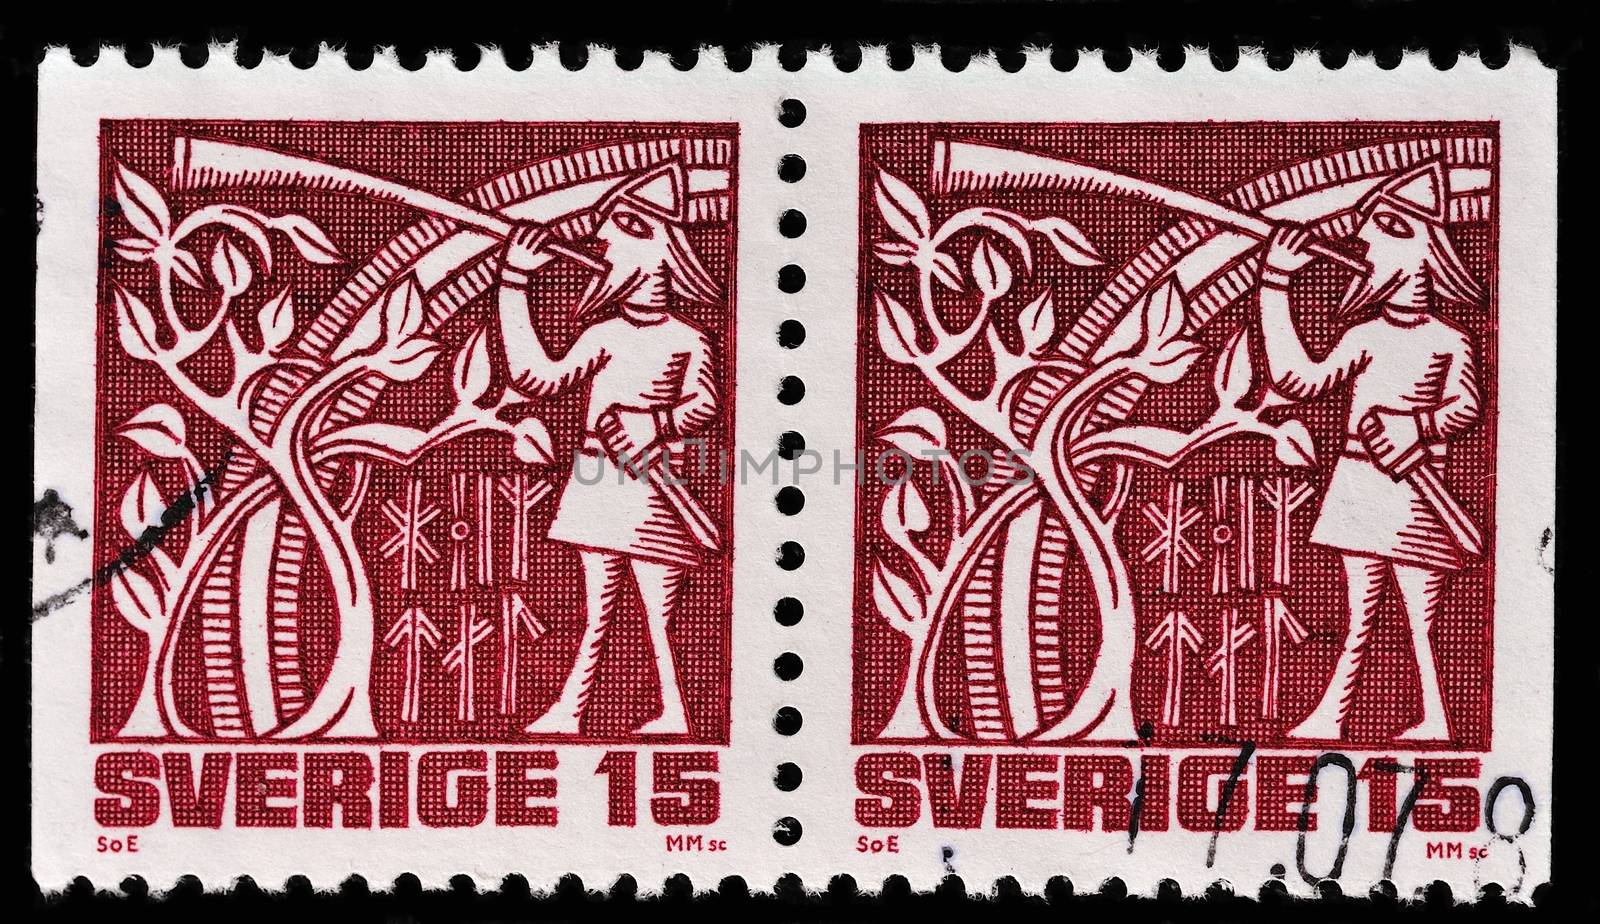 SWEDEN - CIRCA 1981: stamp printed by Sweden, shows Frey, circa 1981